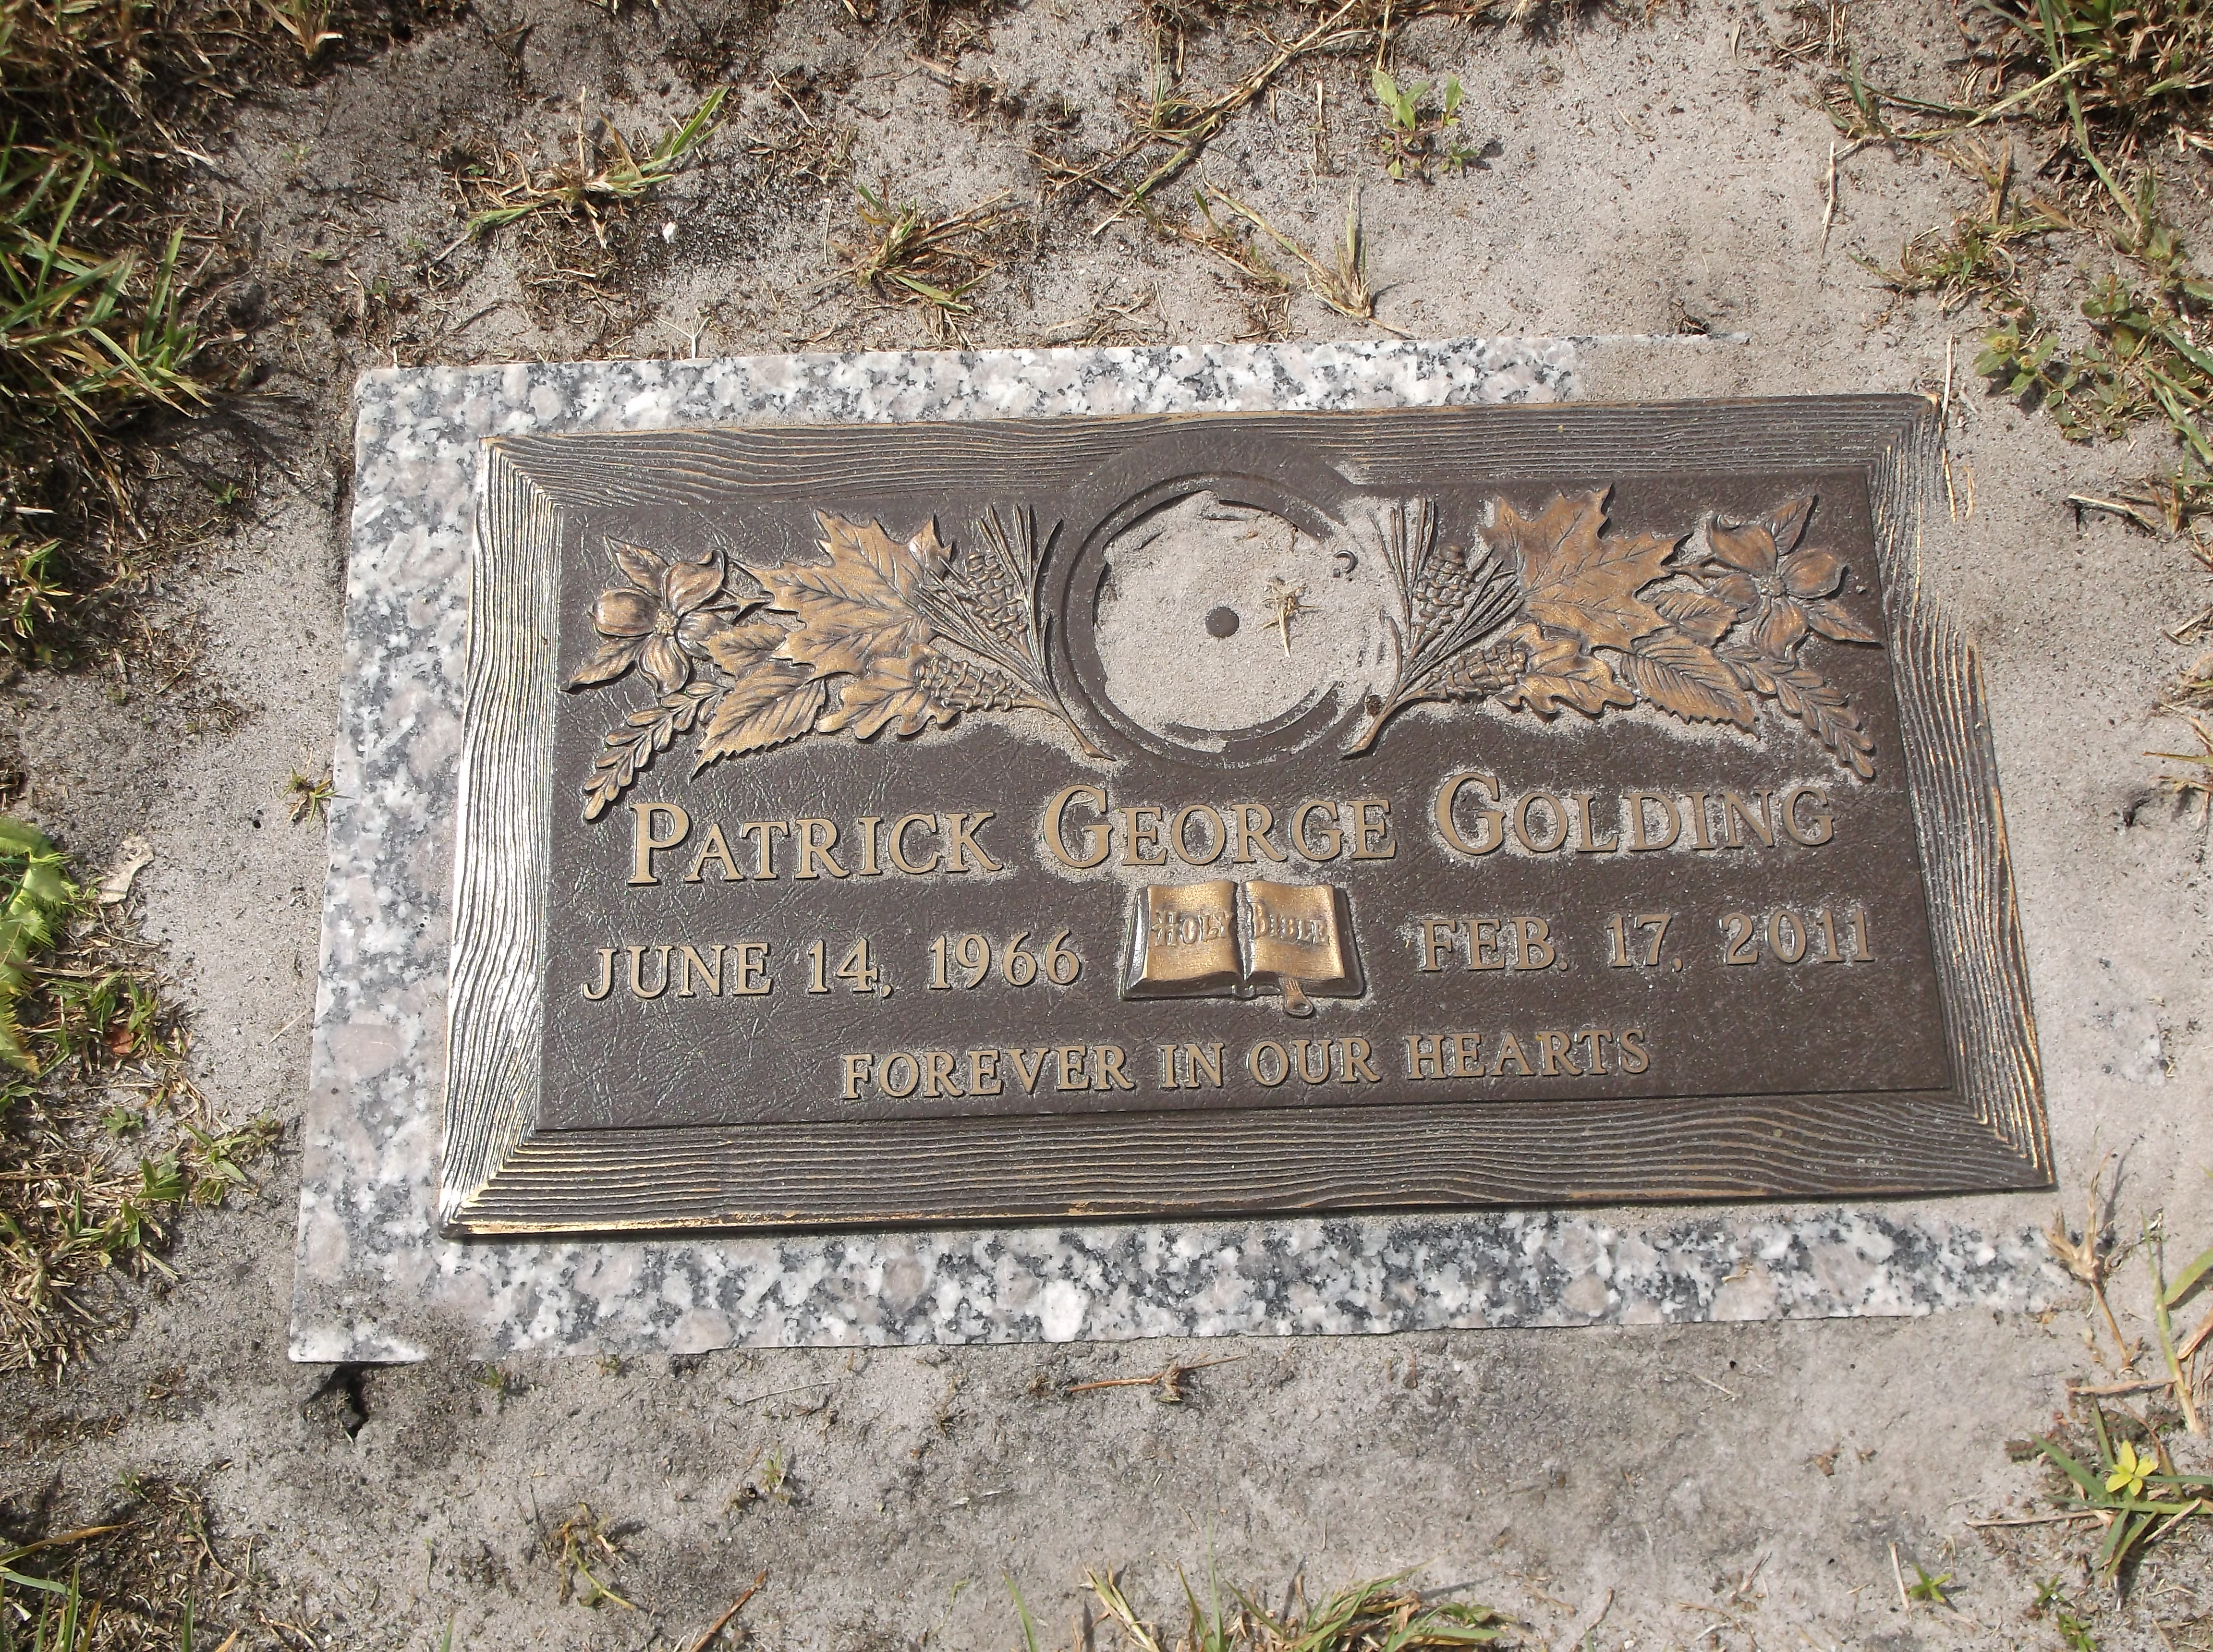 Patrick George Golding